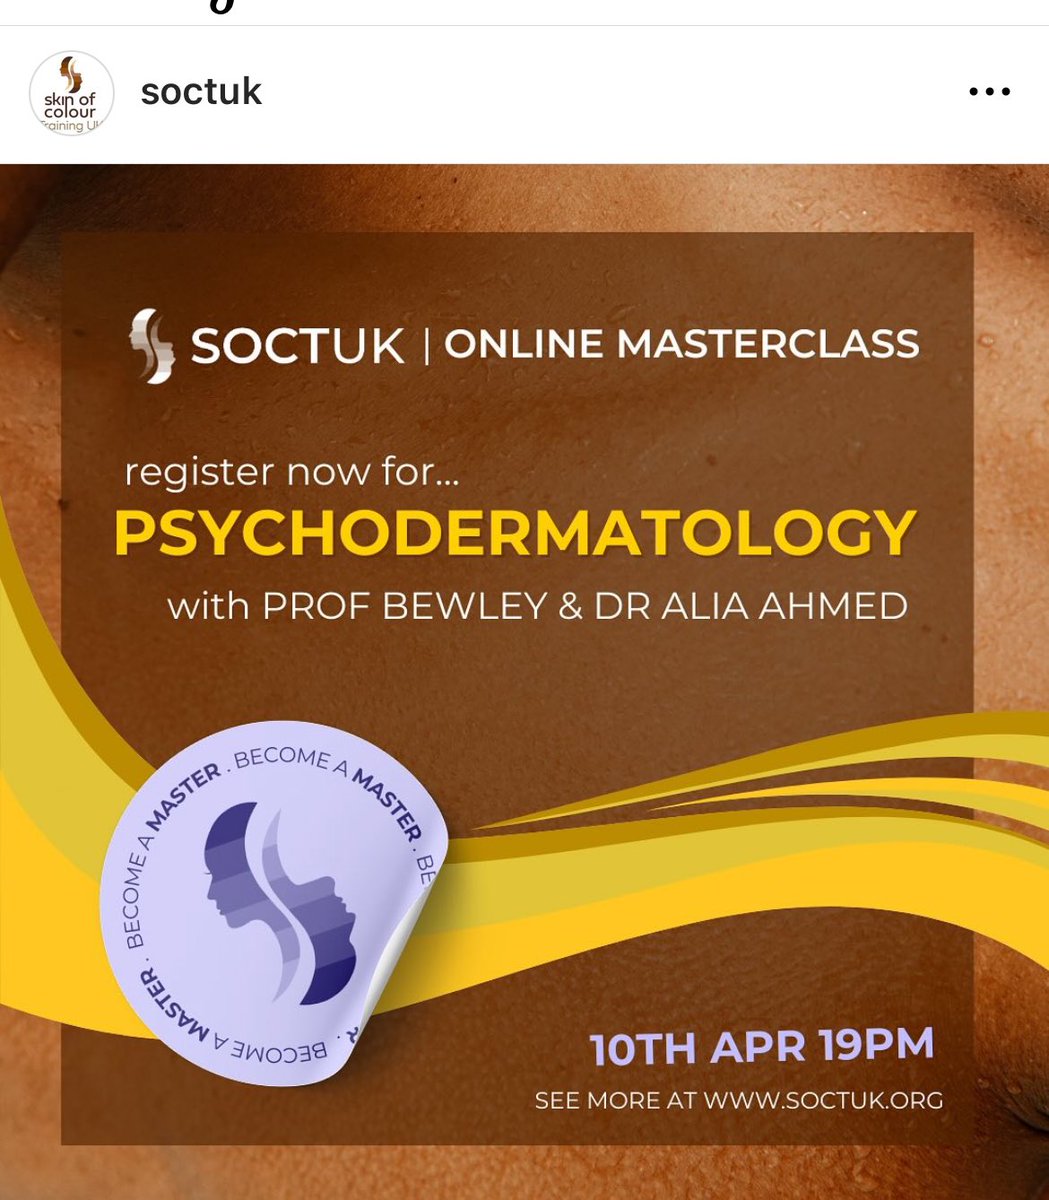 Register now for #SOCTUK online masterclass #psychodermatology